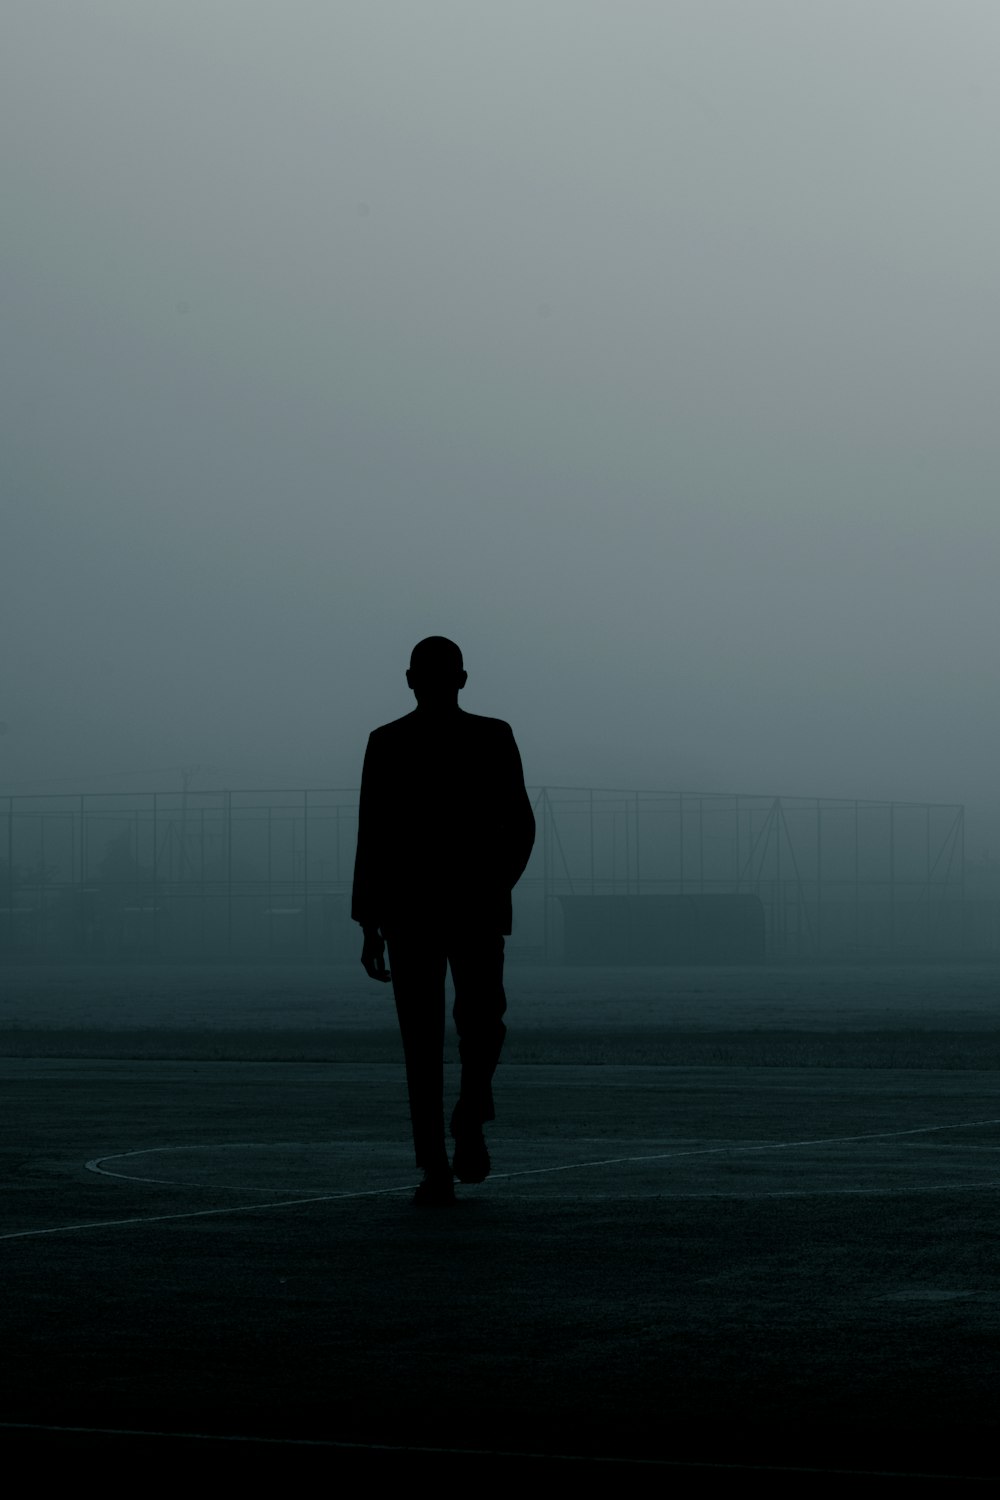 a man in a suit walking in a parking lot